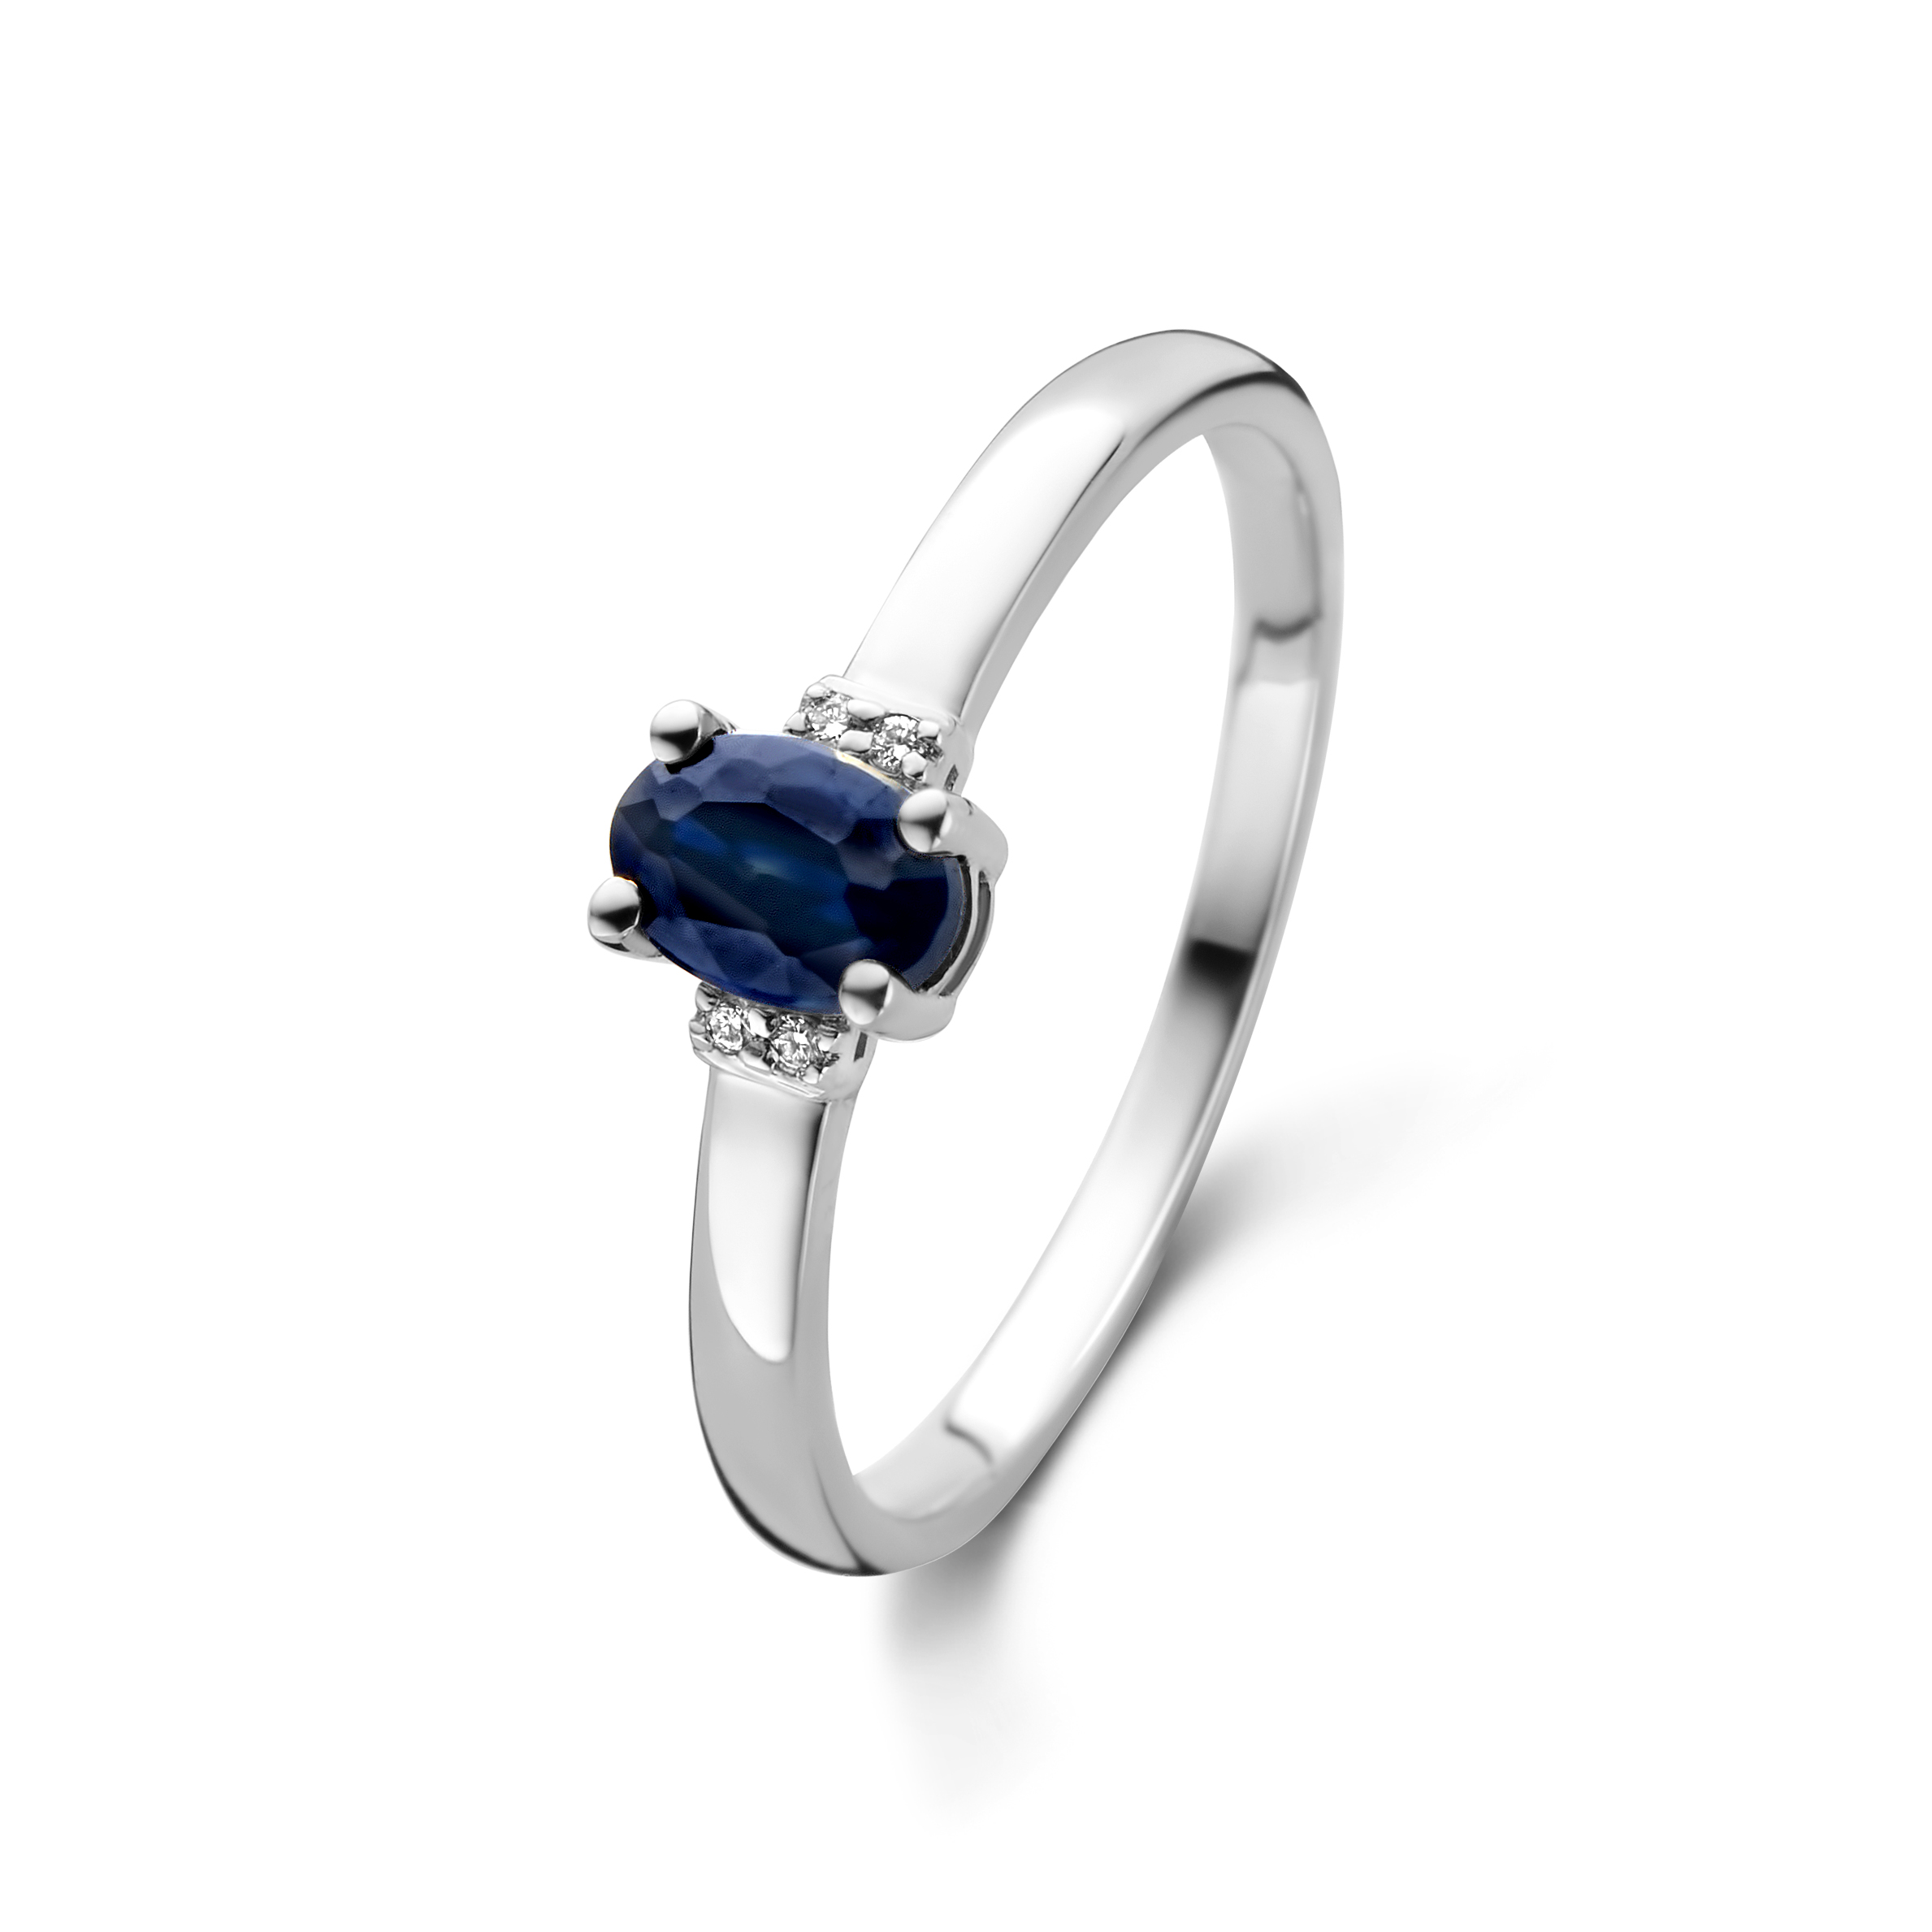 Witgouden ring met saffier en diamant R092-72868R002-SA-W